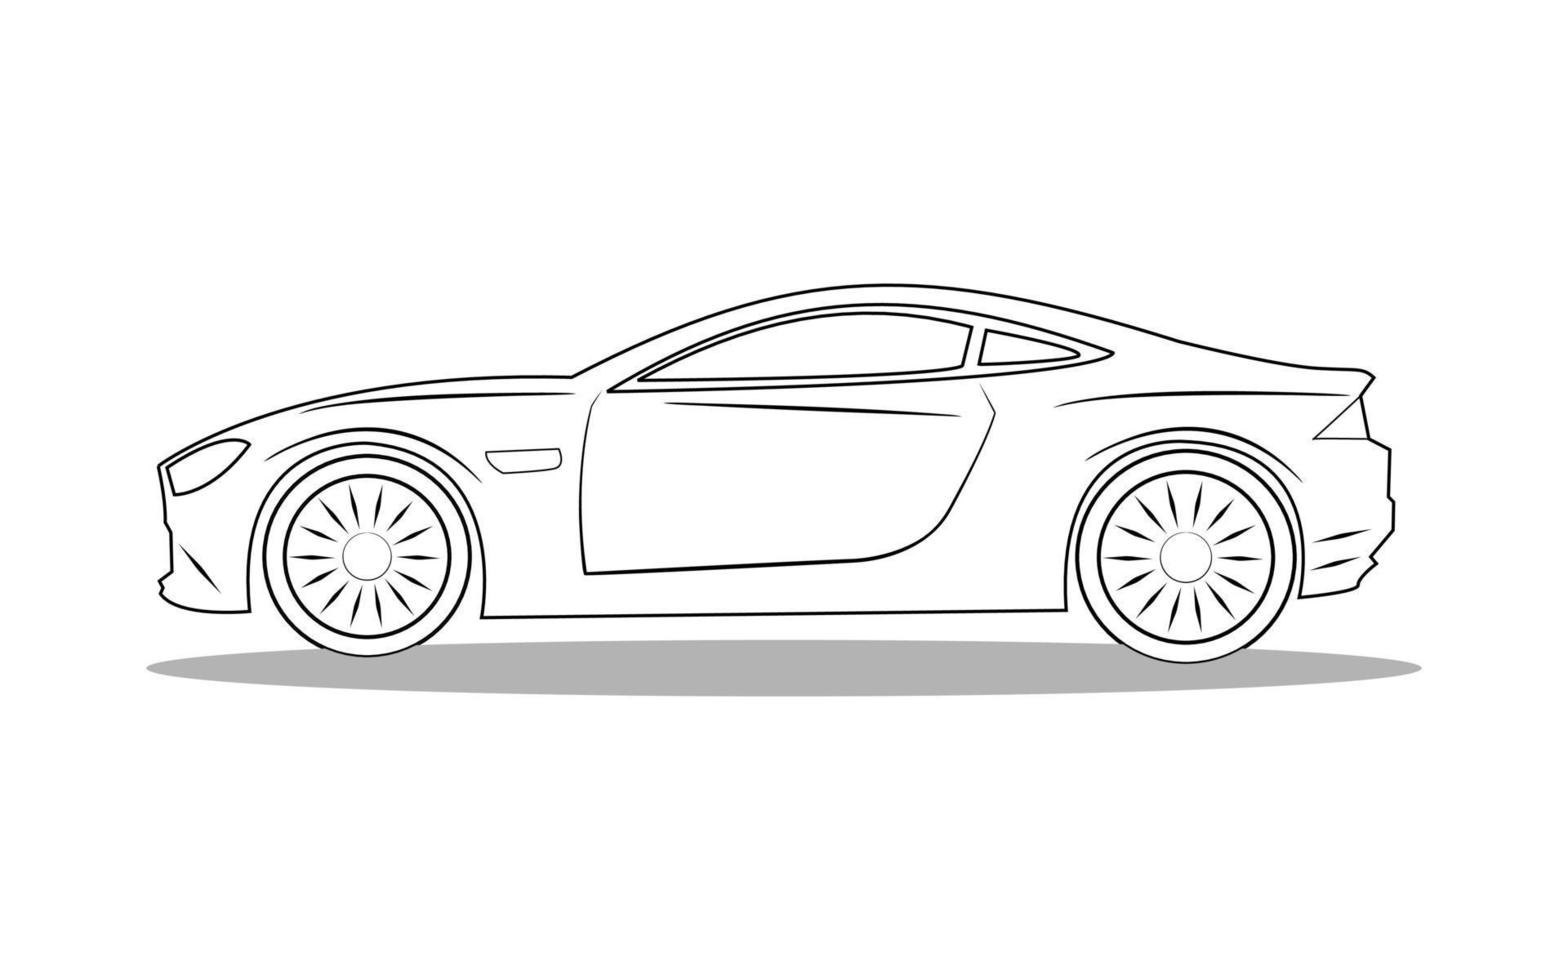 bil vektor linjekonst illustration